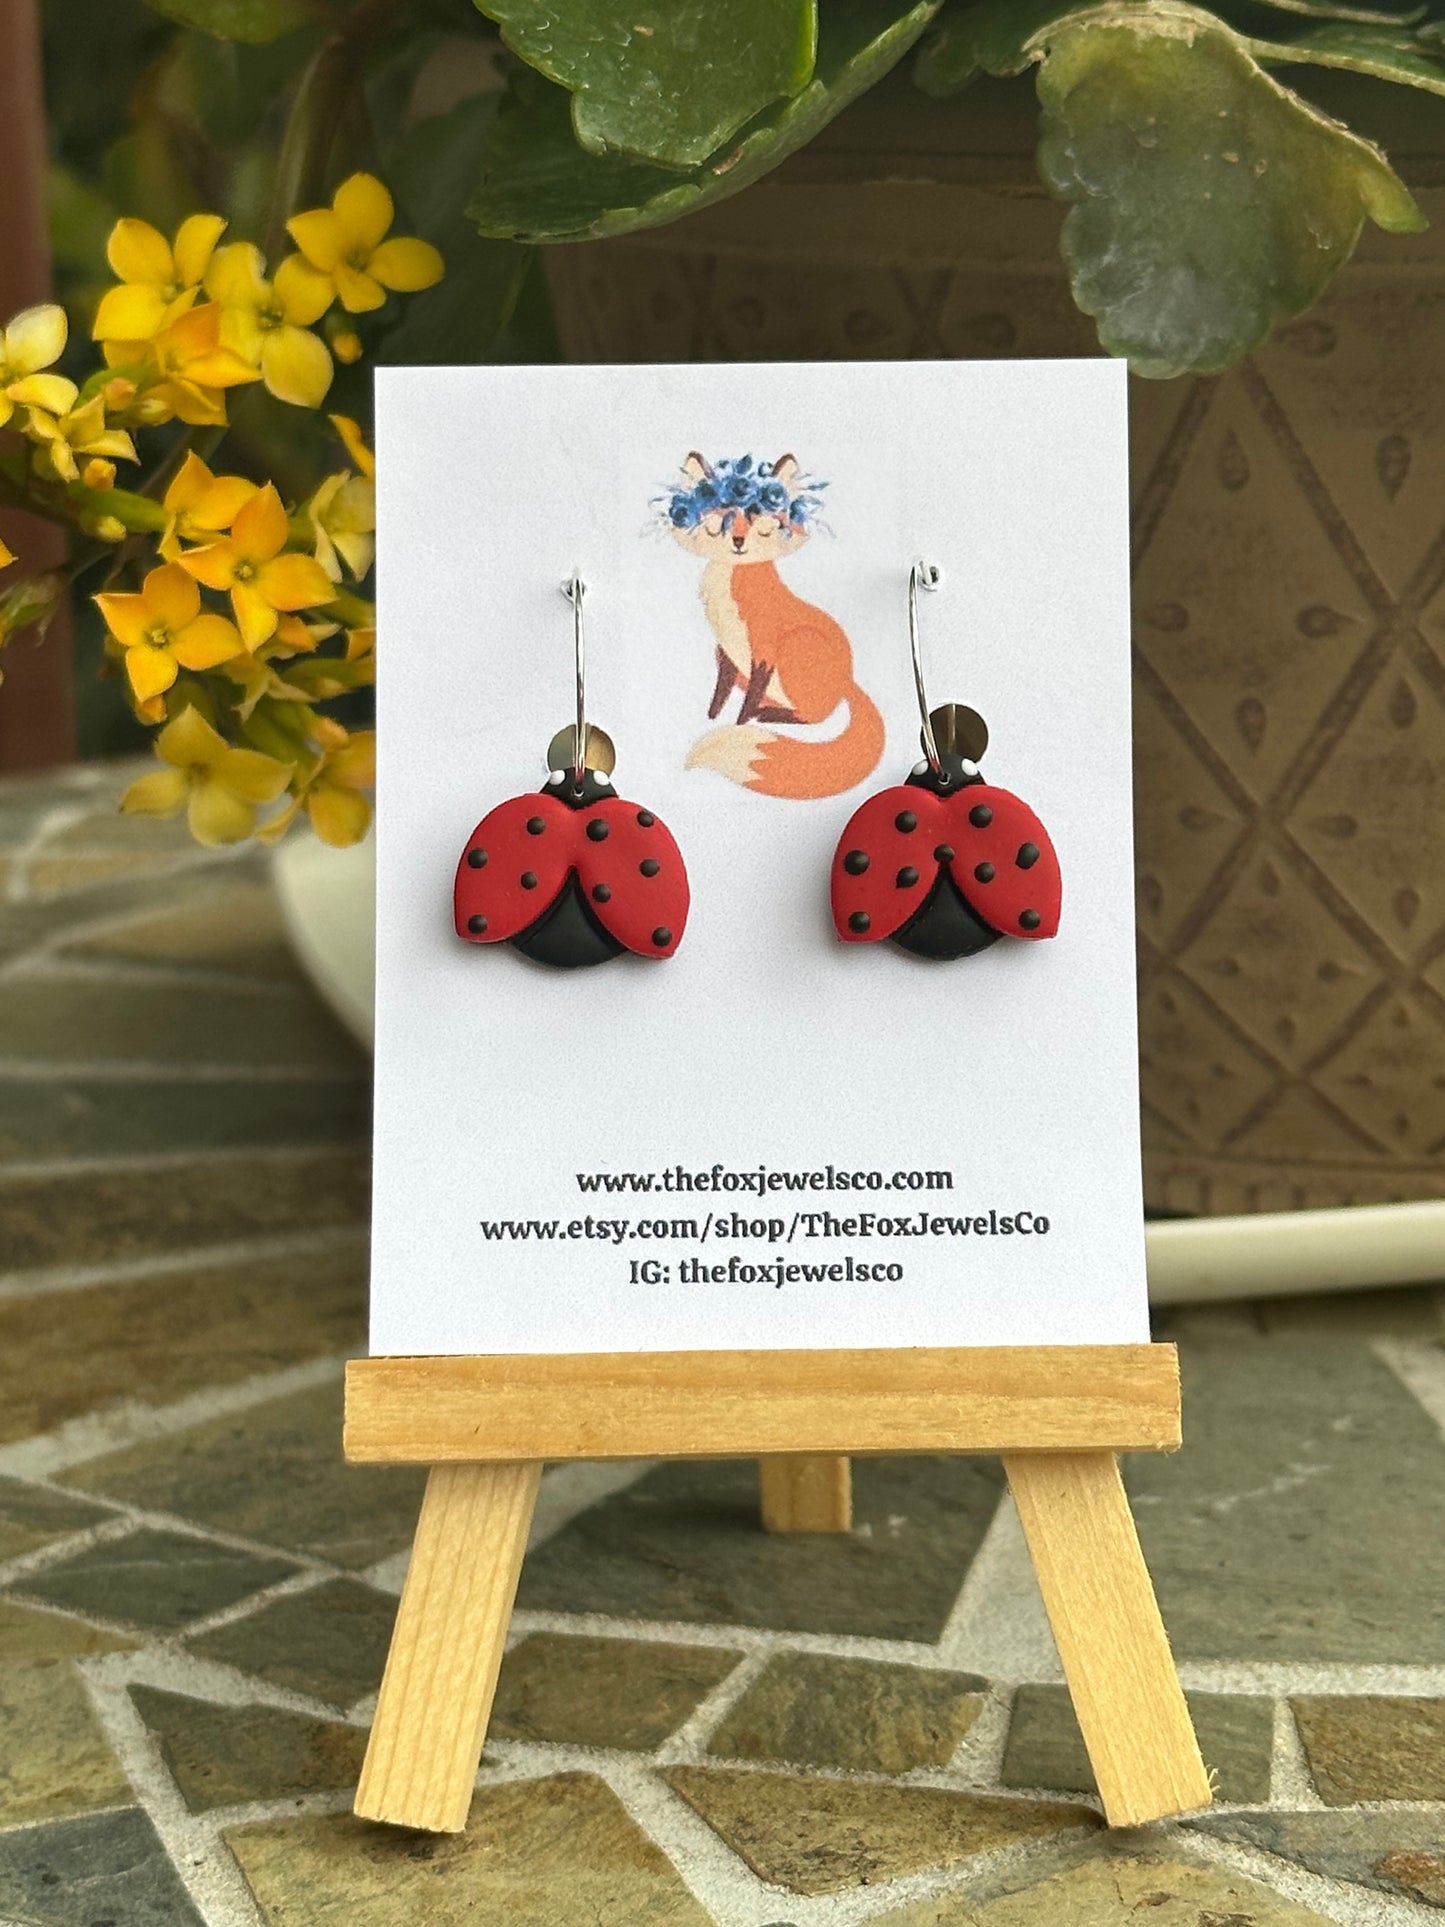 Ladybugs, Ladybug Earrings, Earrings, Nature Earrings, Jewelry, Hoop Earrings, Love bug, Handmade, Handmade Earrings, Gifts, Gifts for her, Gifts for friends, Gifts for moms